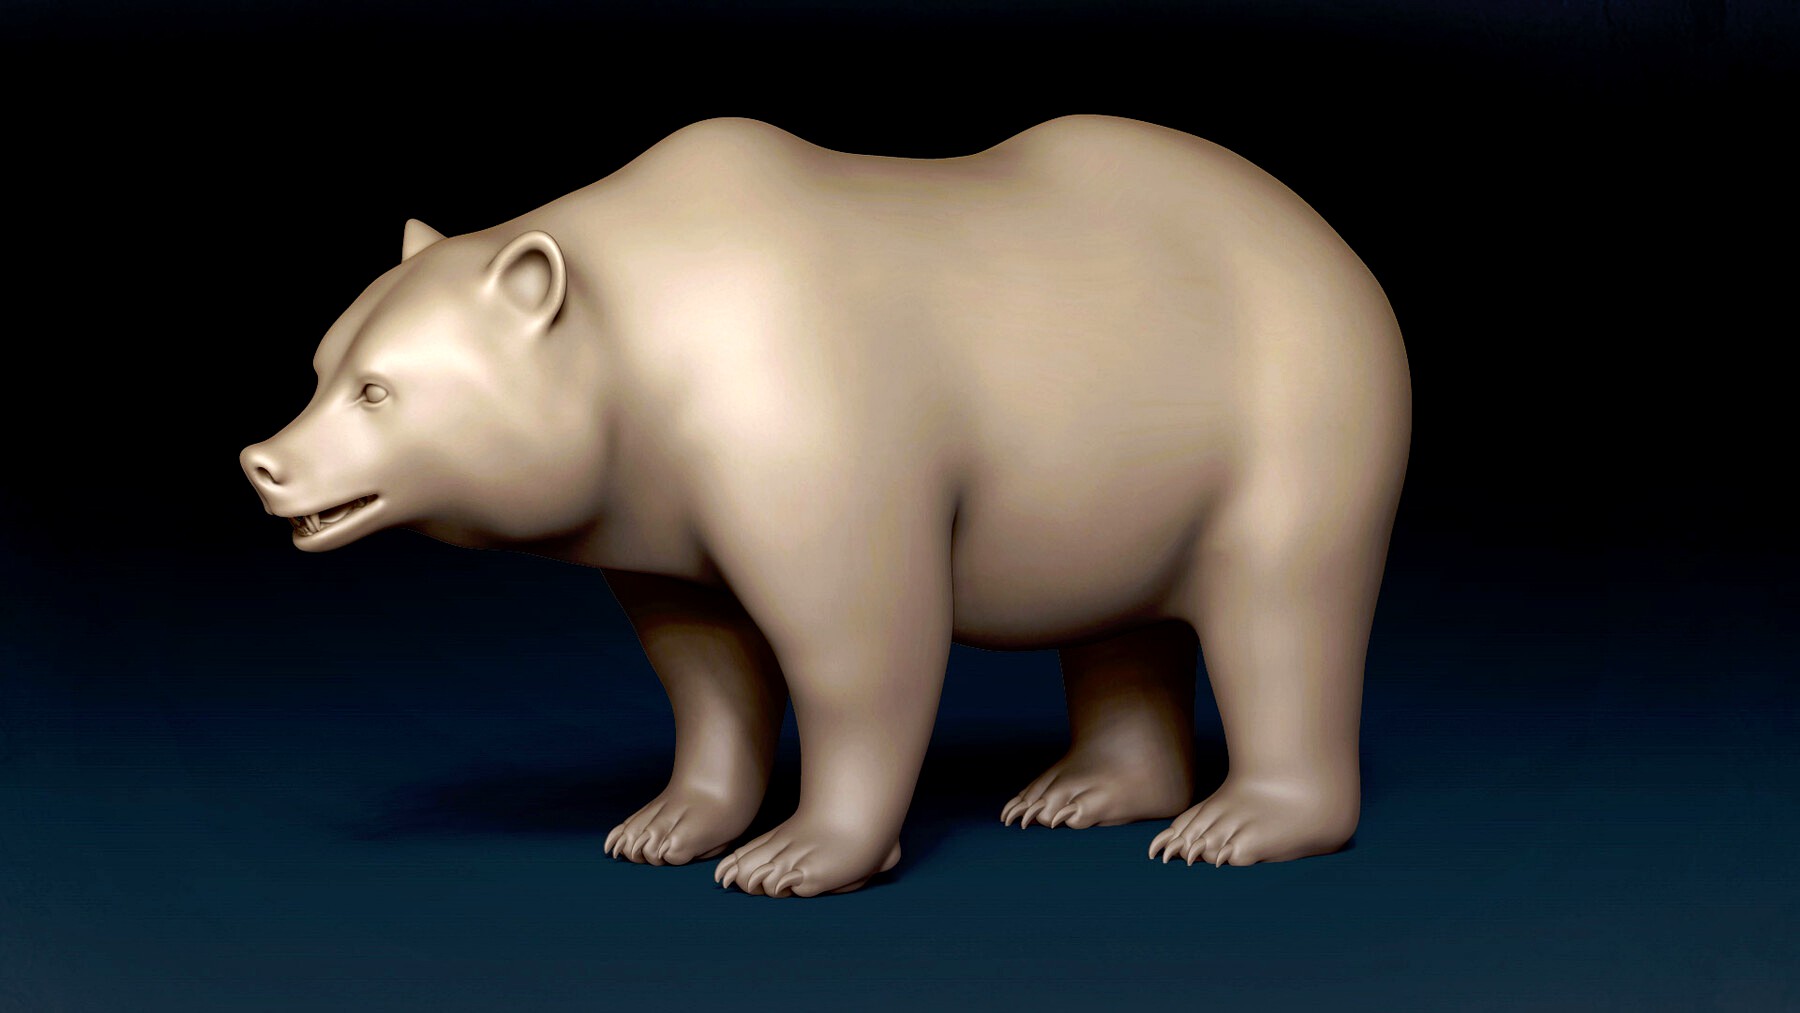 Brown Bear Basemesh 3D model